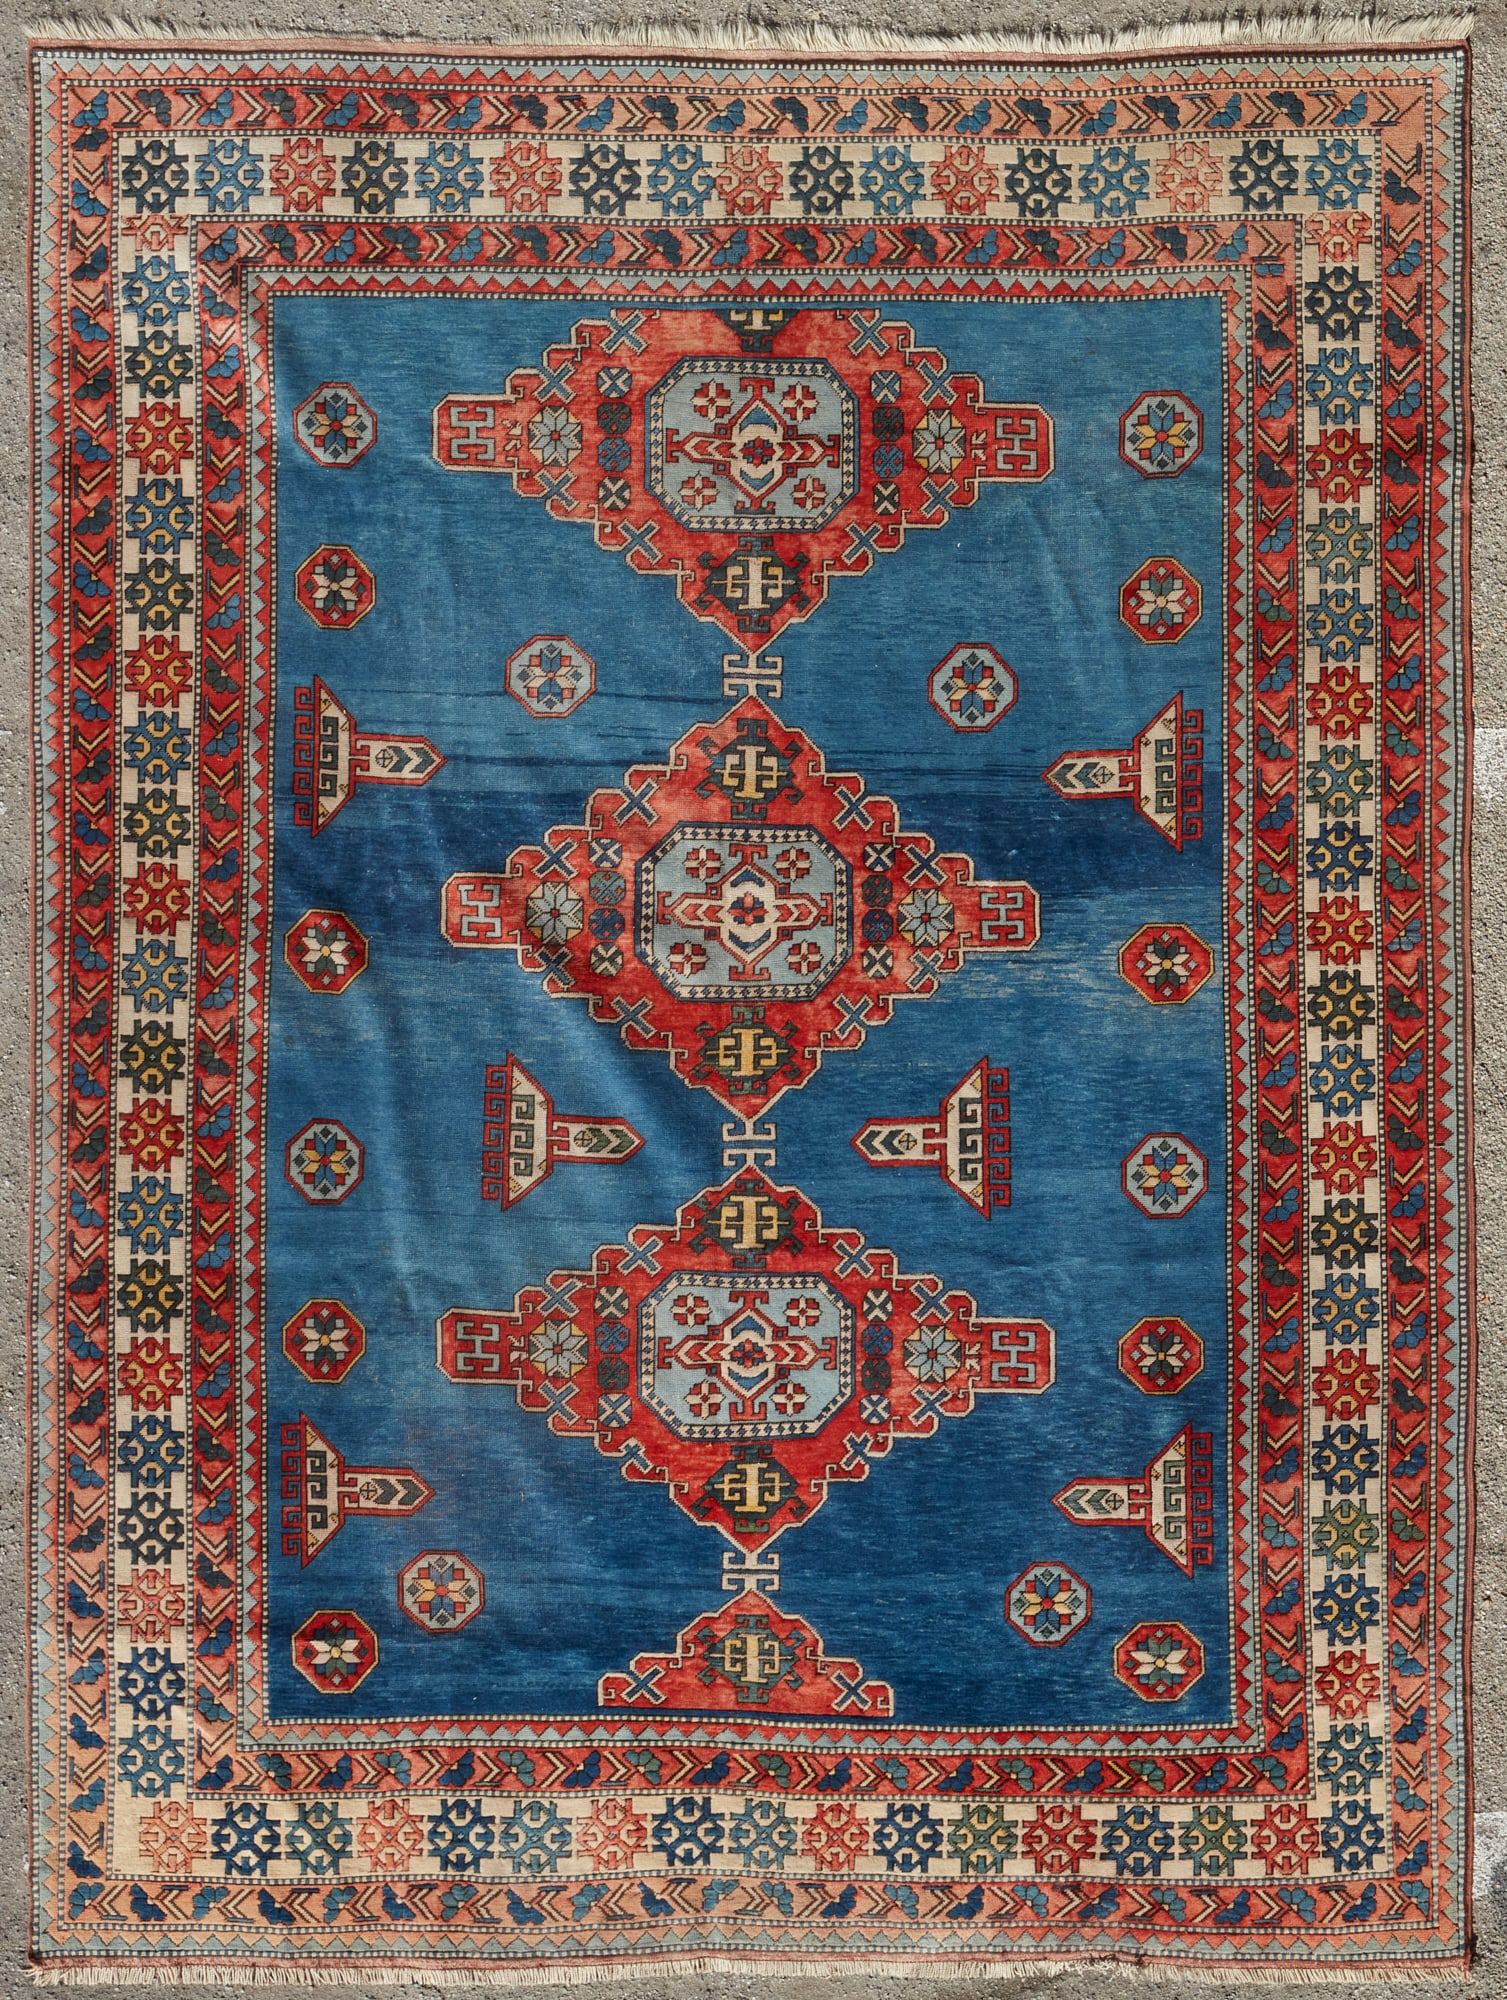 A TURKISH CARPETA Turkish carpetapproximately